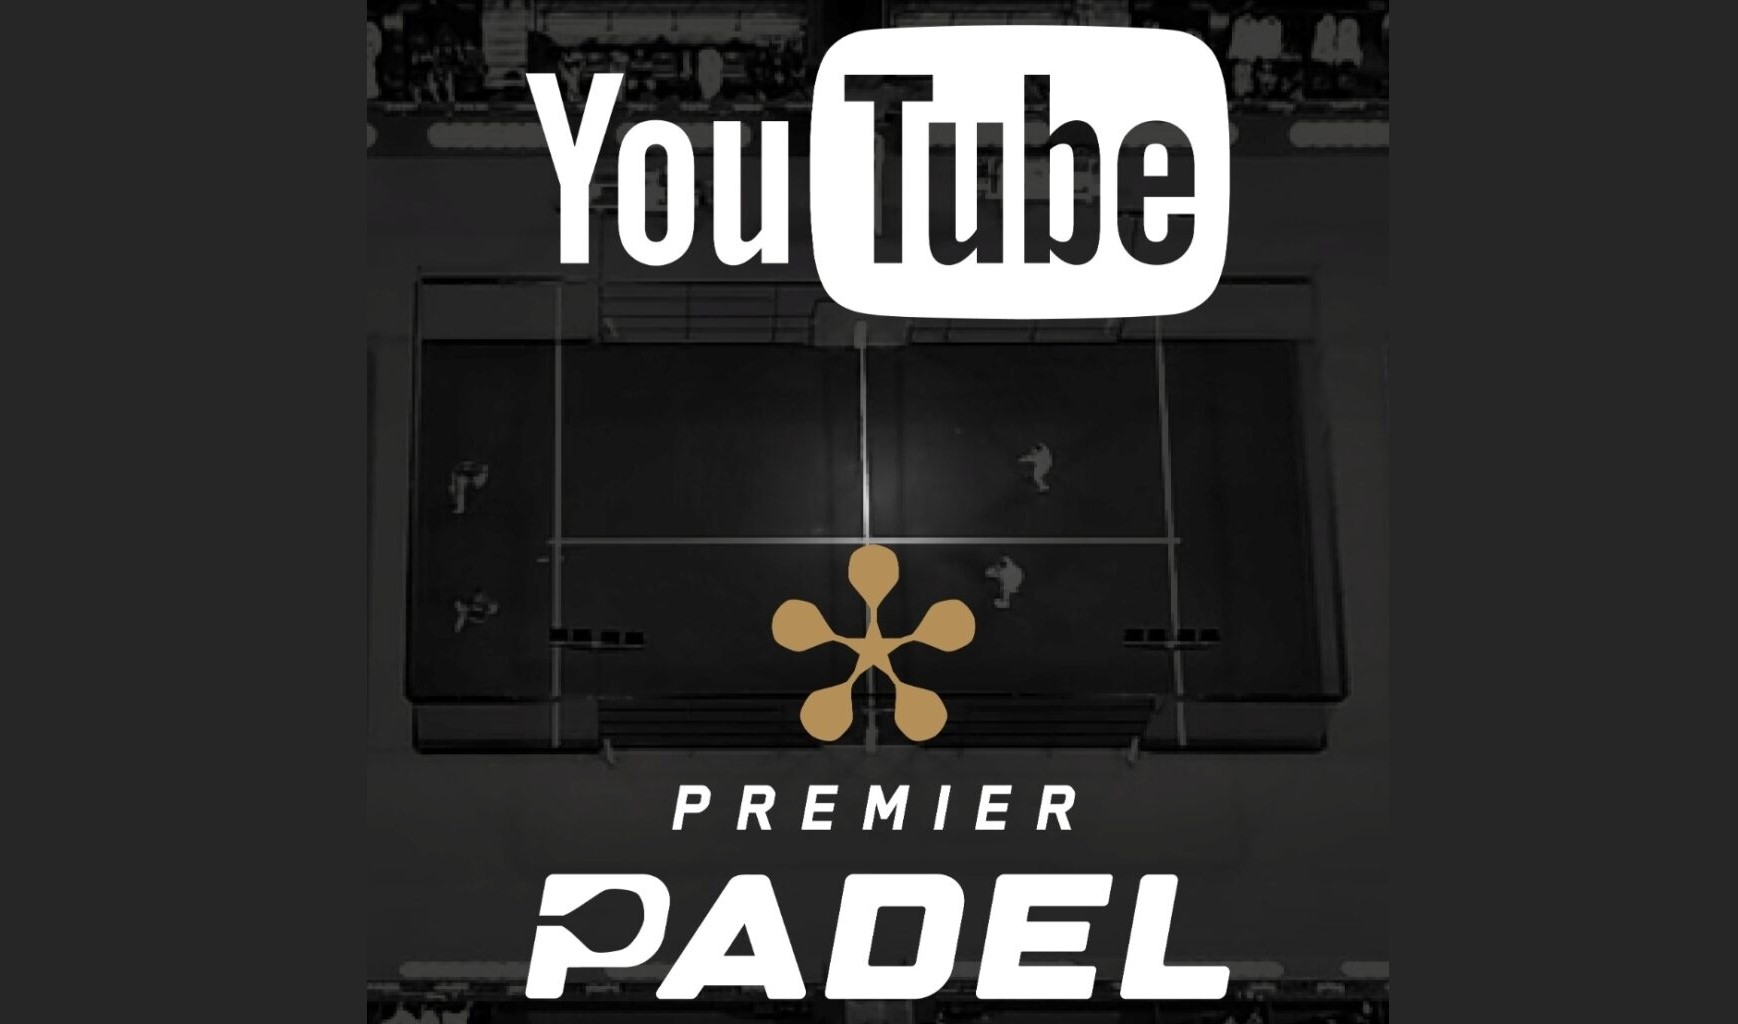 Premier Padel スペインのYoutubeで放映